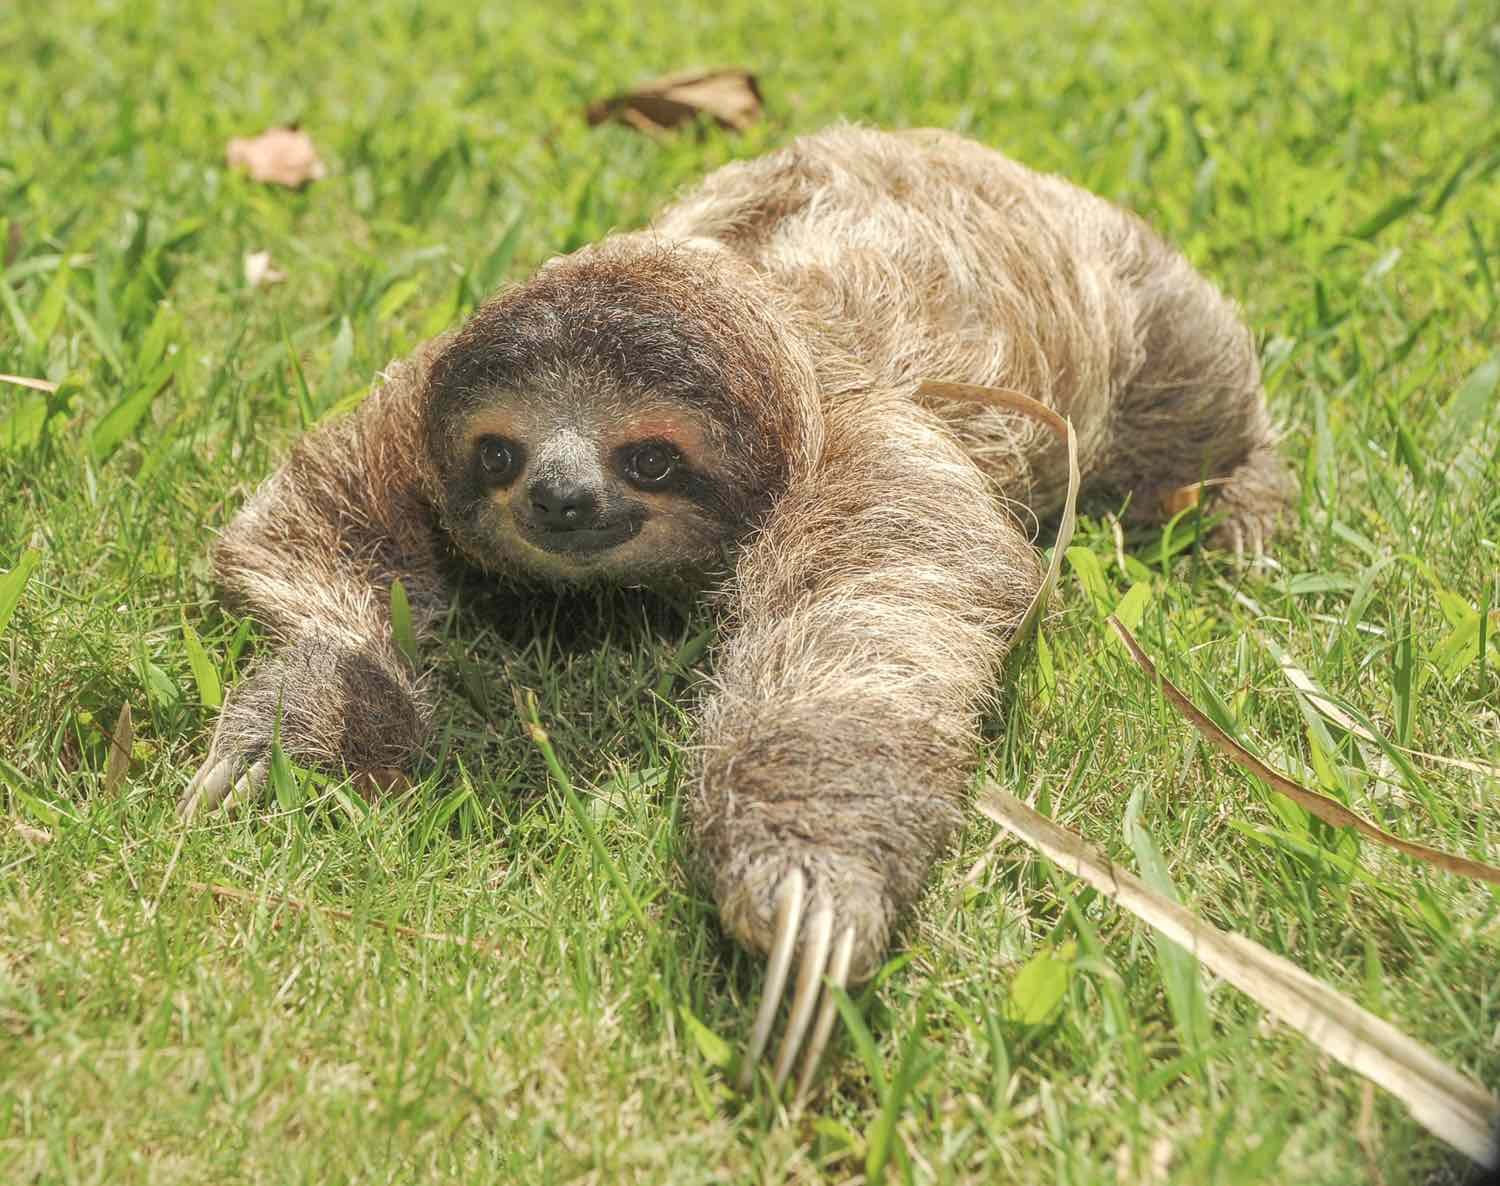 14Custom-Travel-Vacation-Travel-Sloth-Crawl-Grass-1